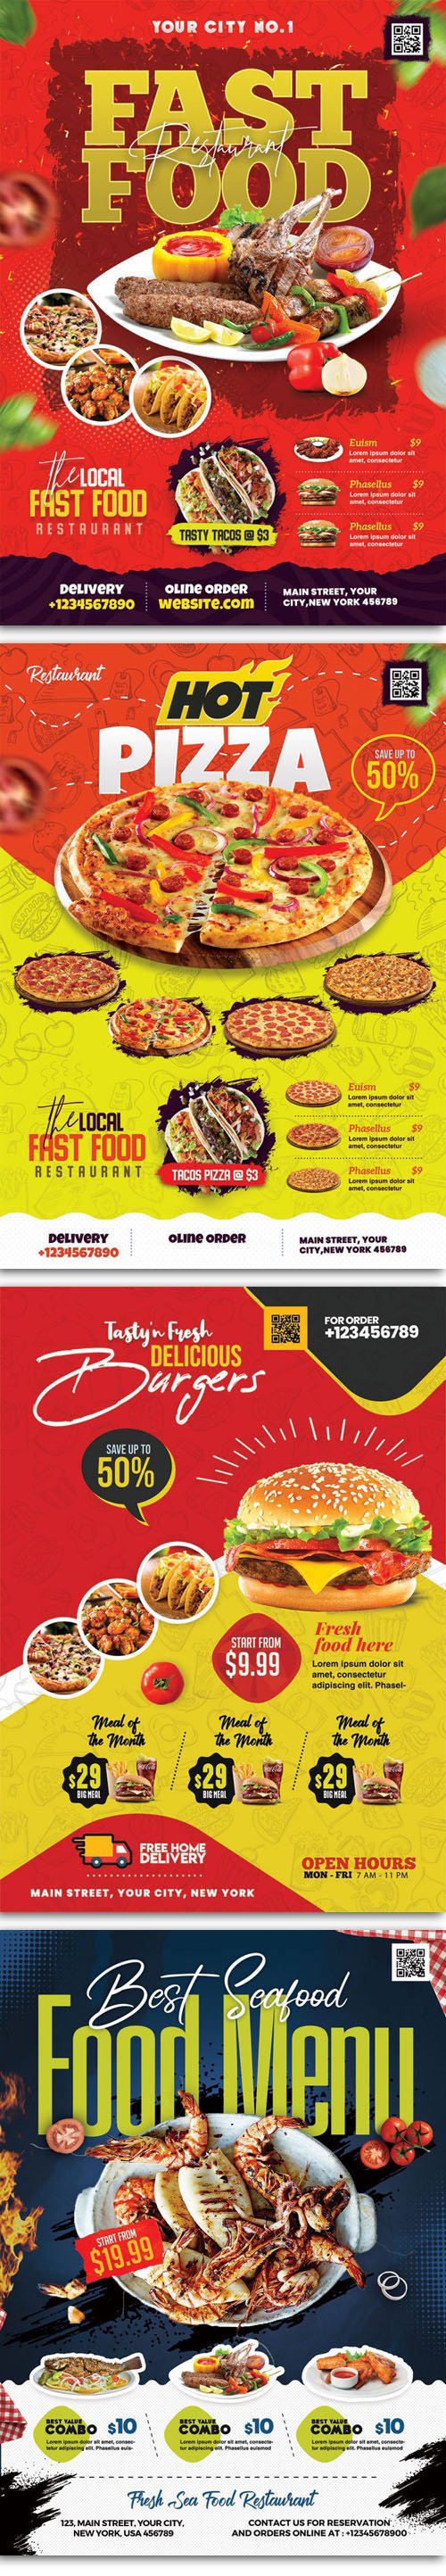 Restaurant Food Menu - 4 Promotional Flyers PSD Templates